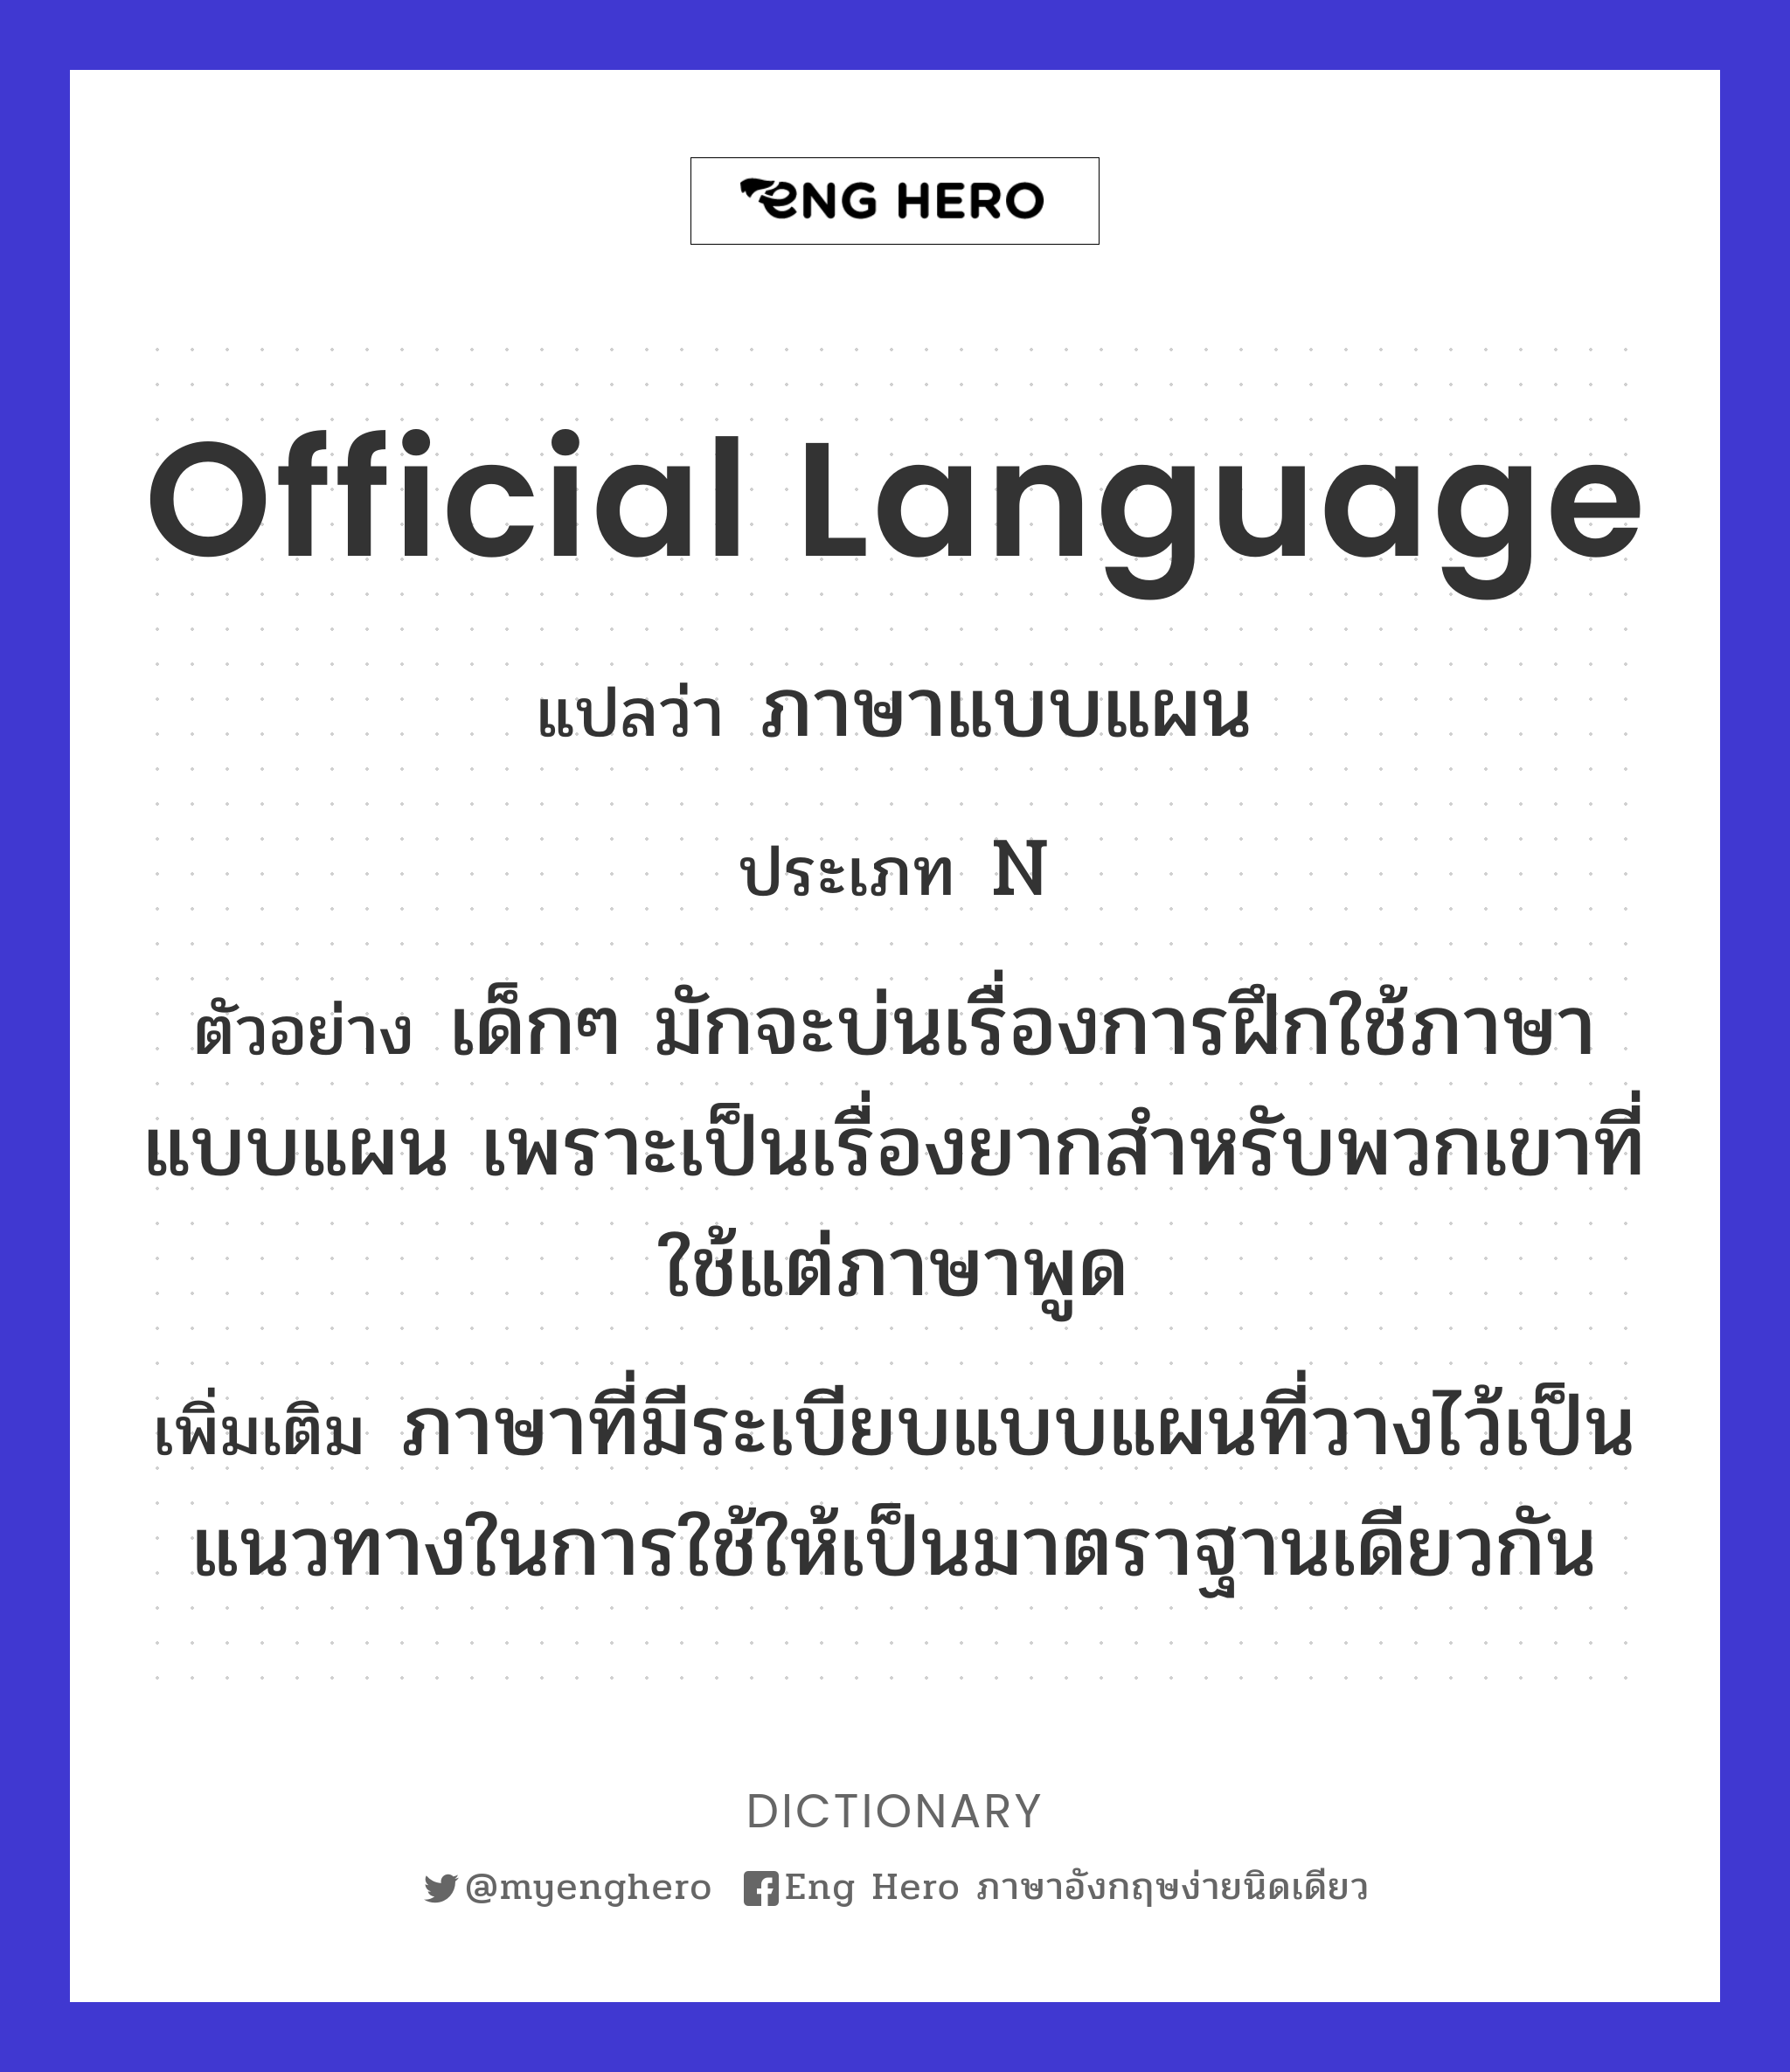 official language